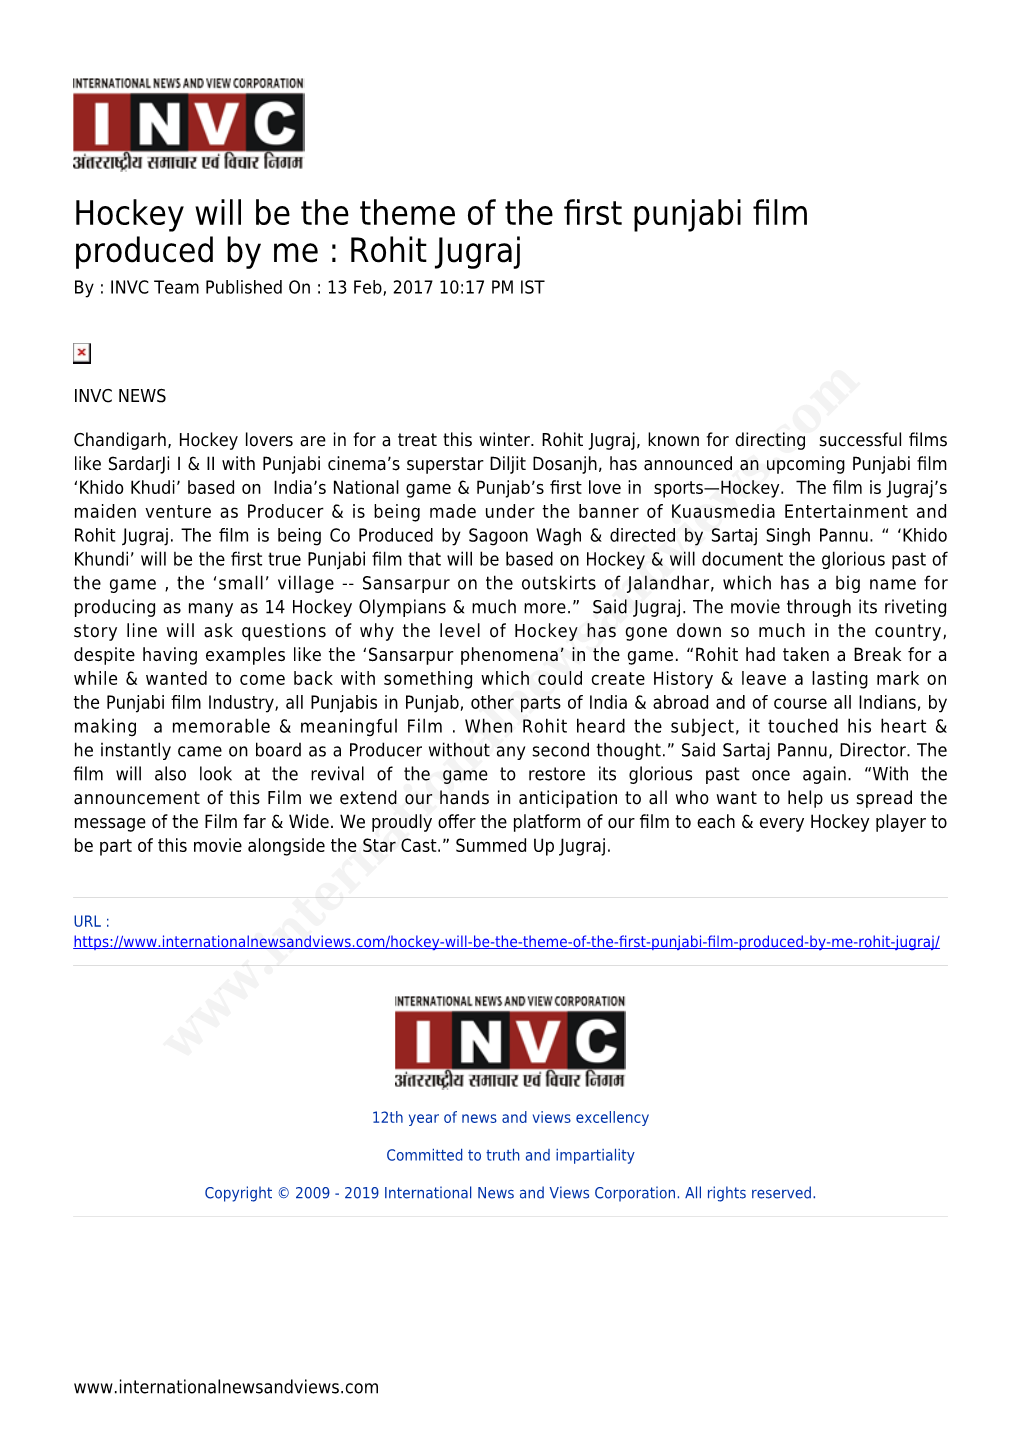 Rohit Jugraj by : INVC Team Published on : 13 Feb, 2017 10:17 PM IST